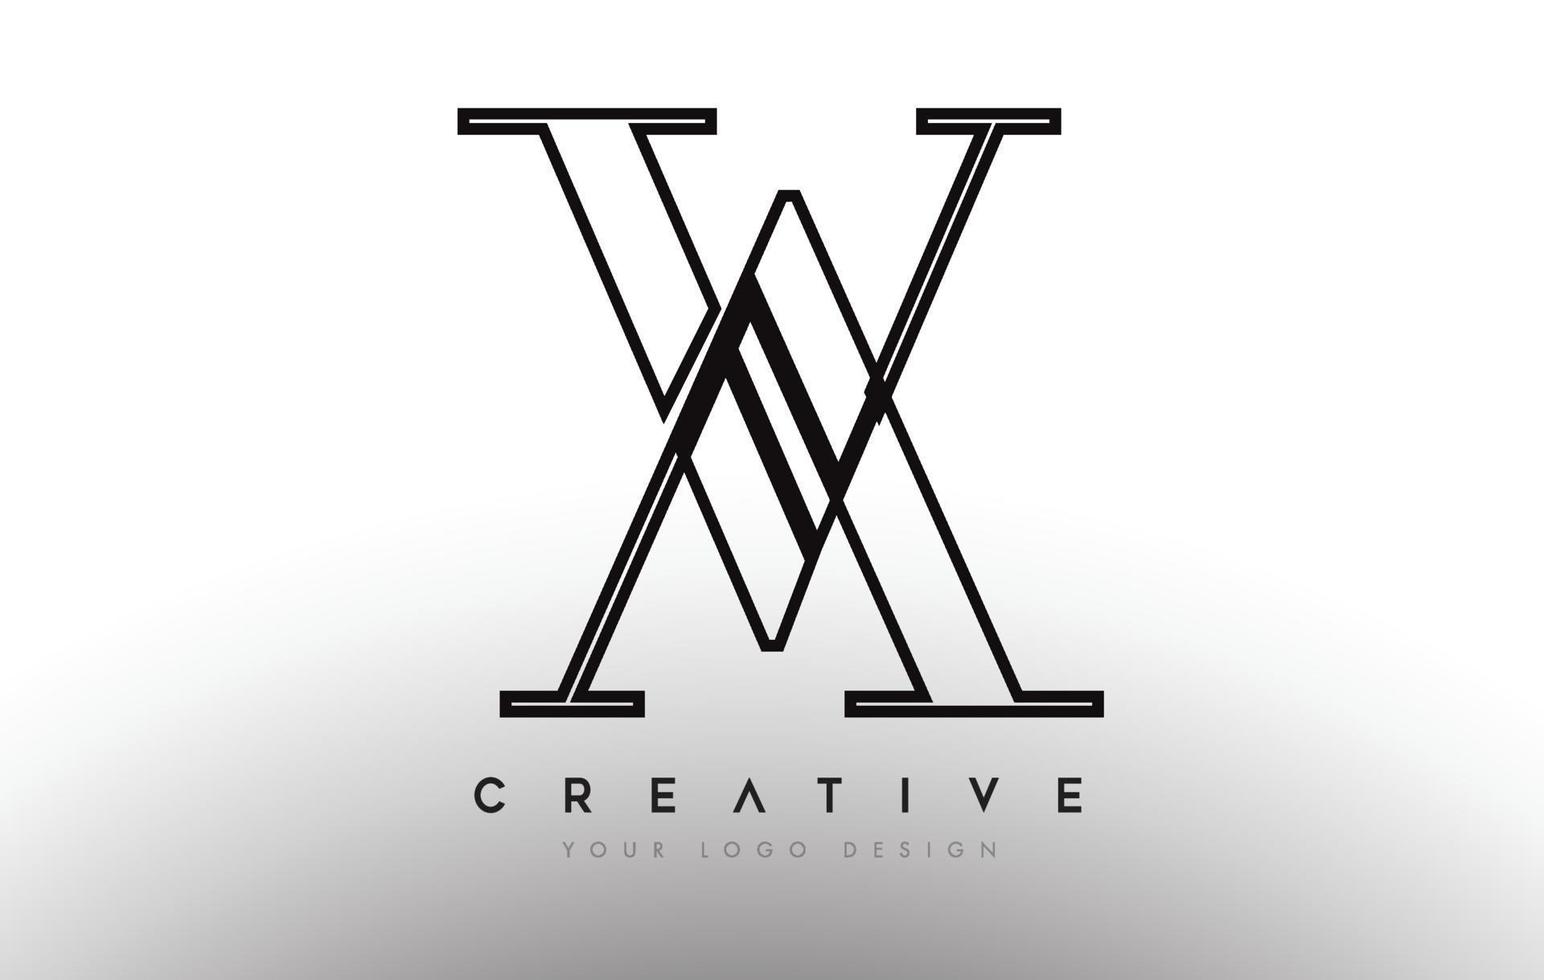 AV va letter design logo logotype icon concept with serif font and classic elegant style look vector